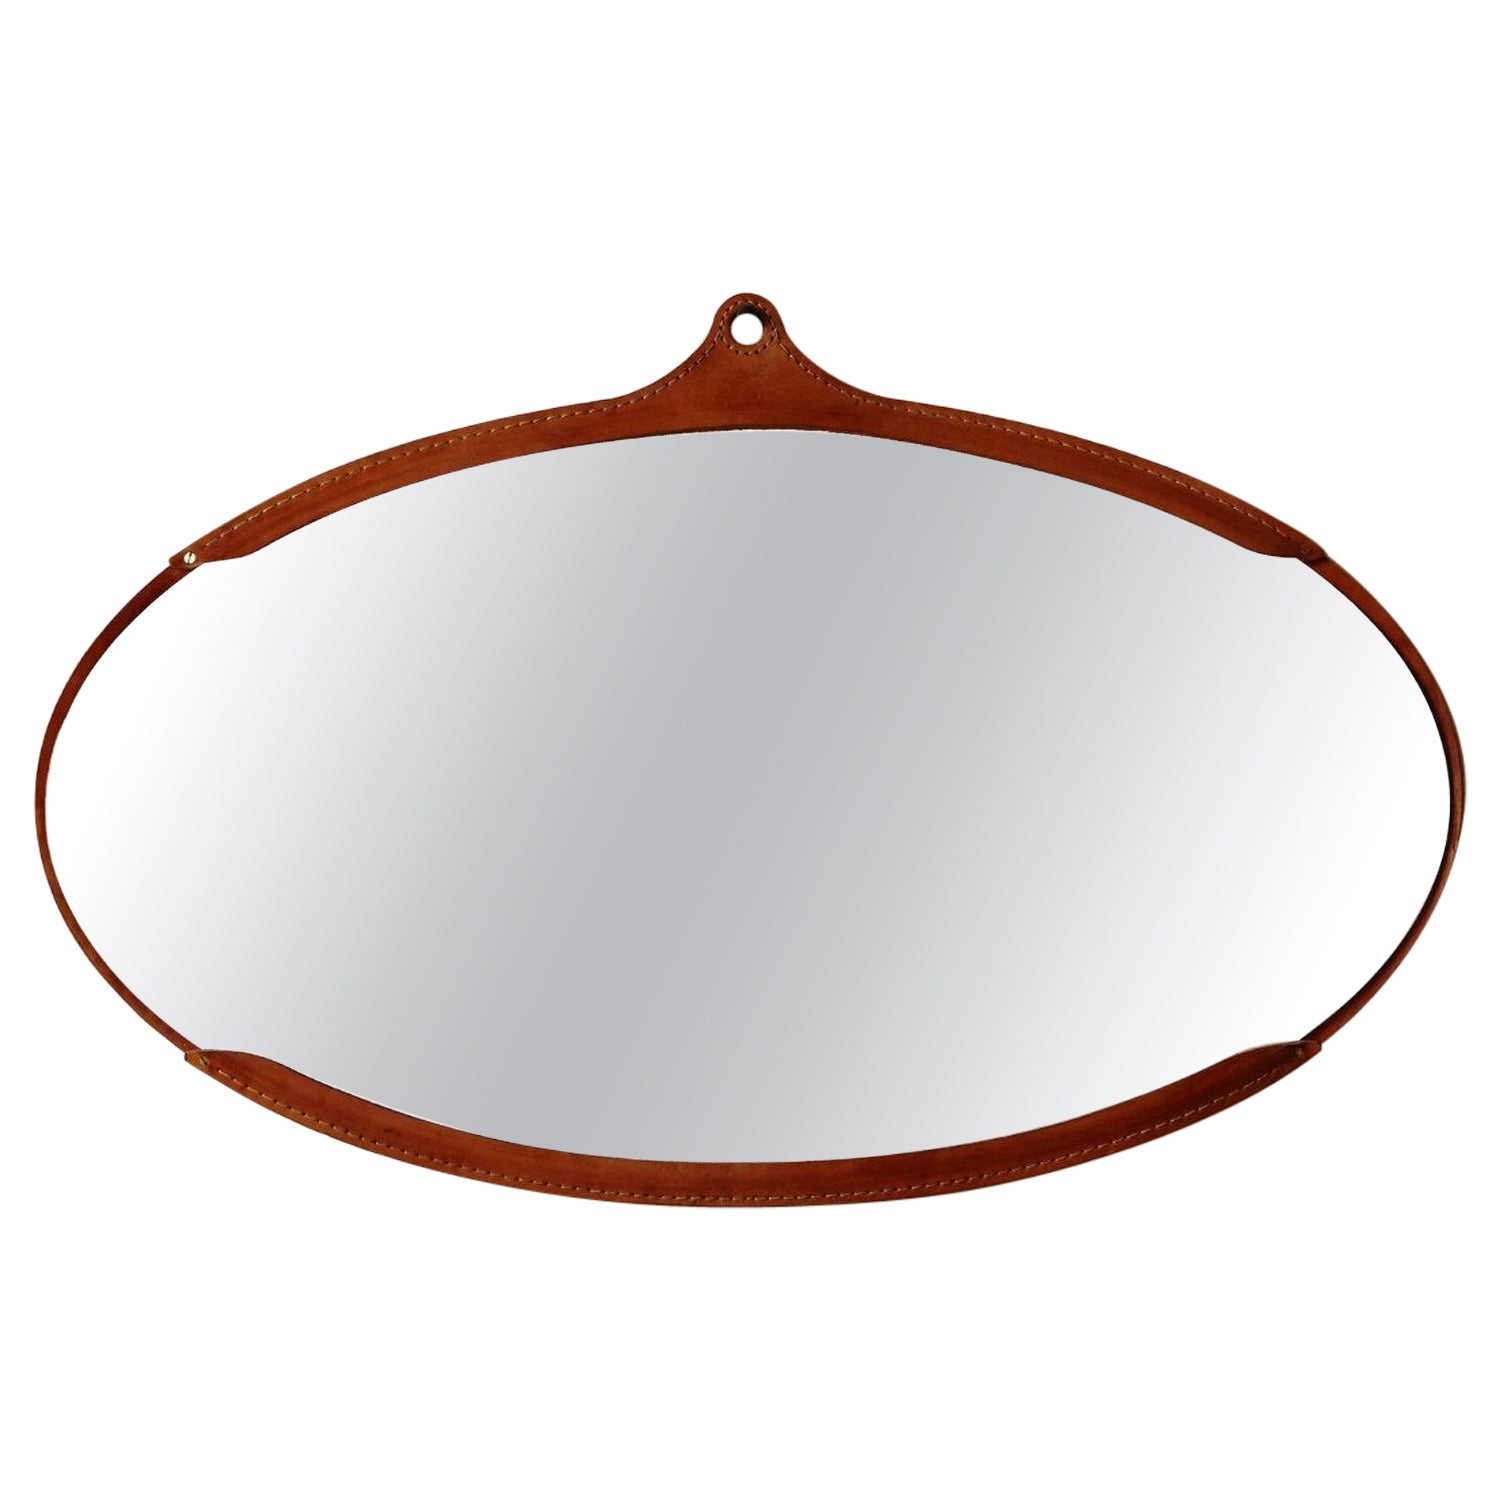 Tan Leather Modern Oval Fairmount Wall Mirror